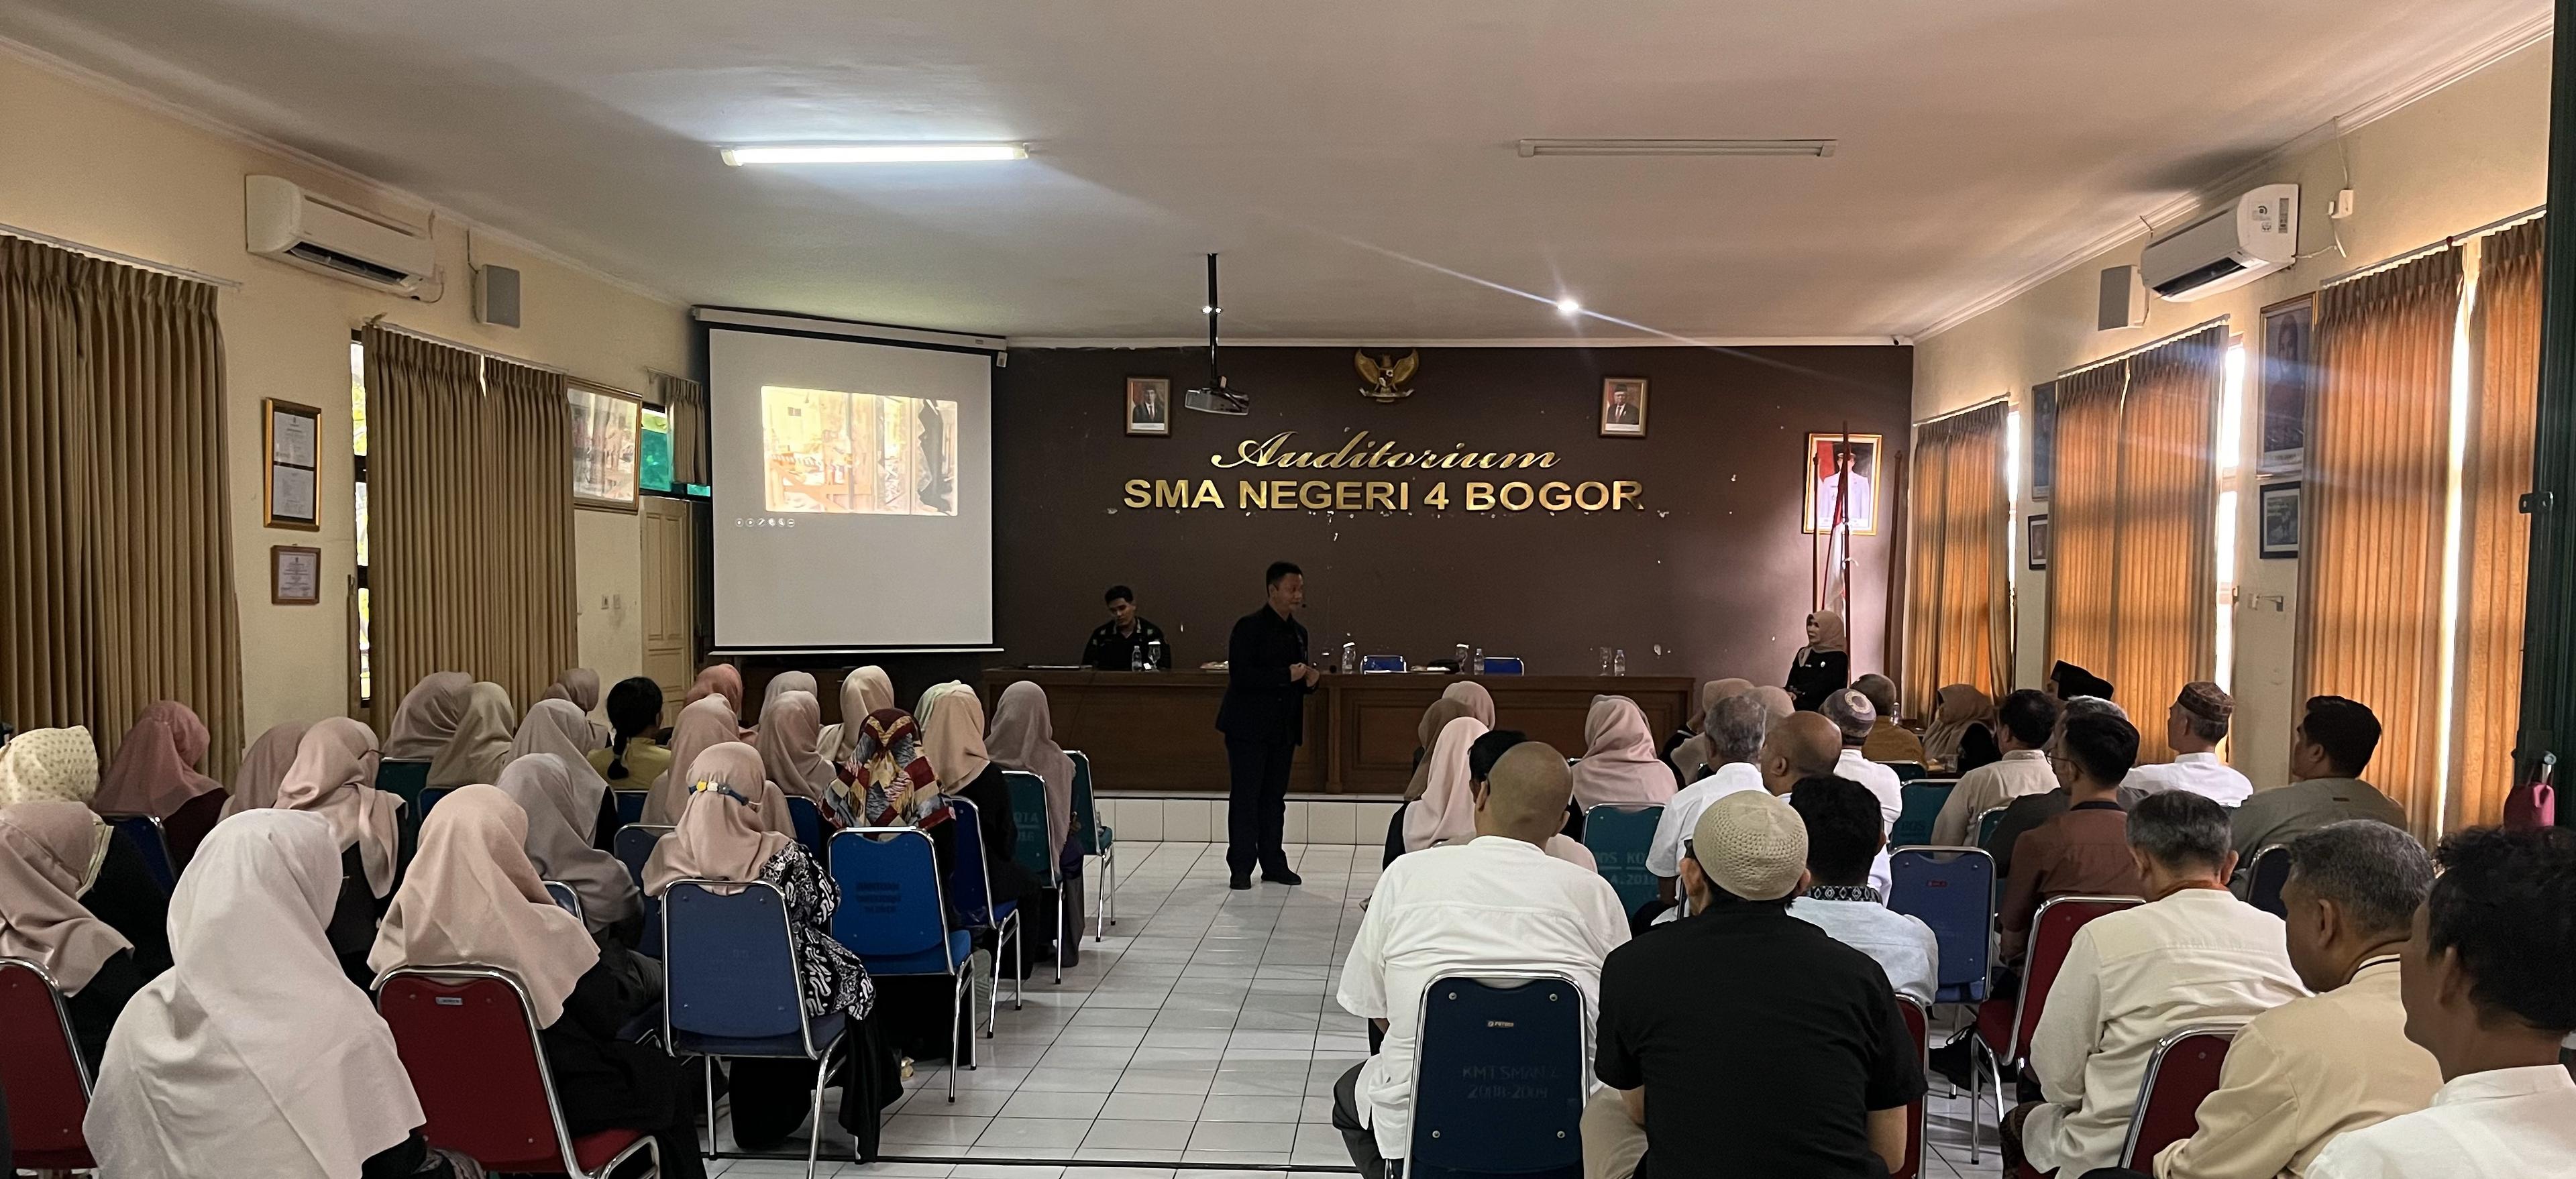 Training Character Building with Panca Olah Method Guru SMAN 04 Bogor